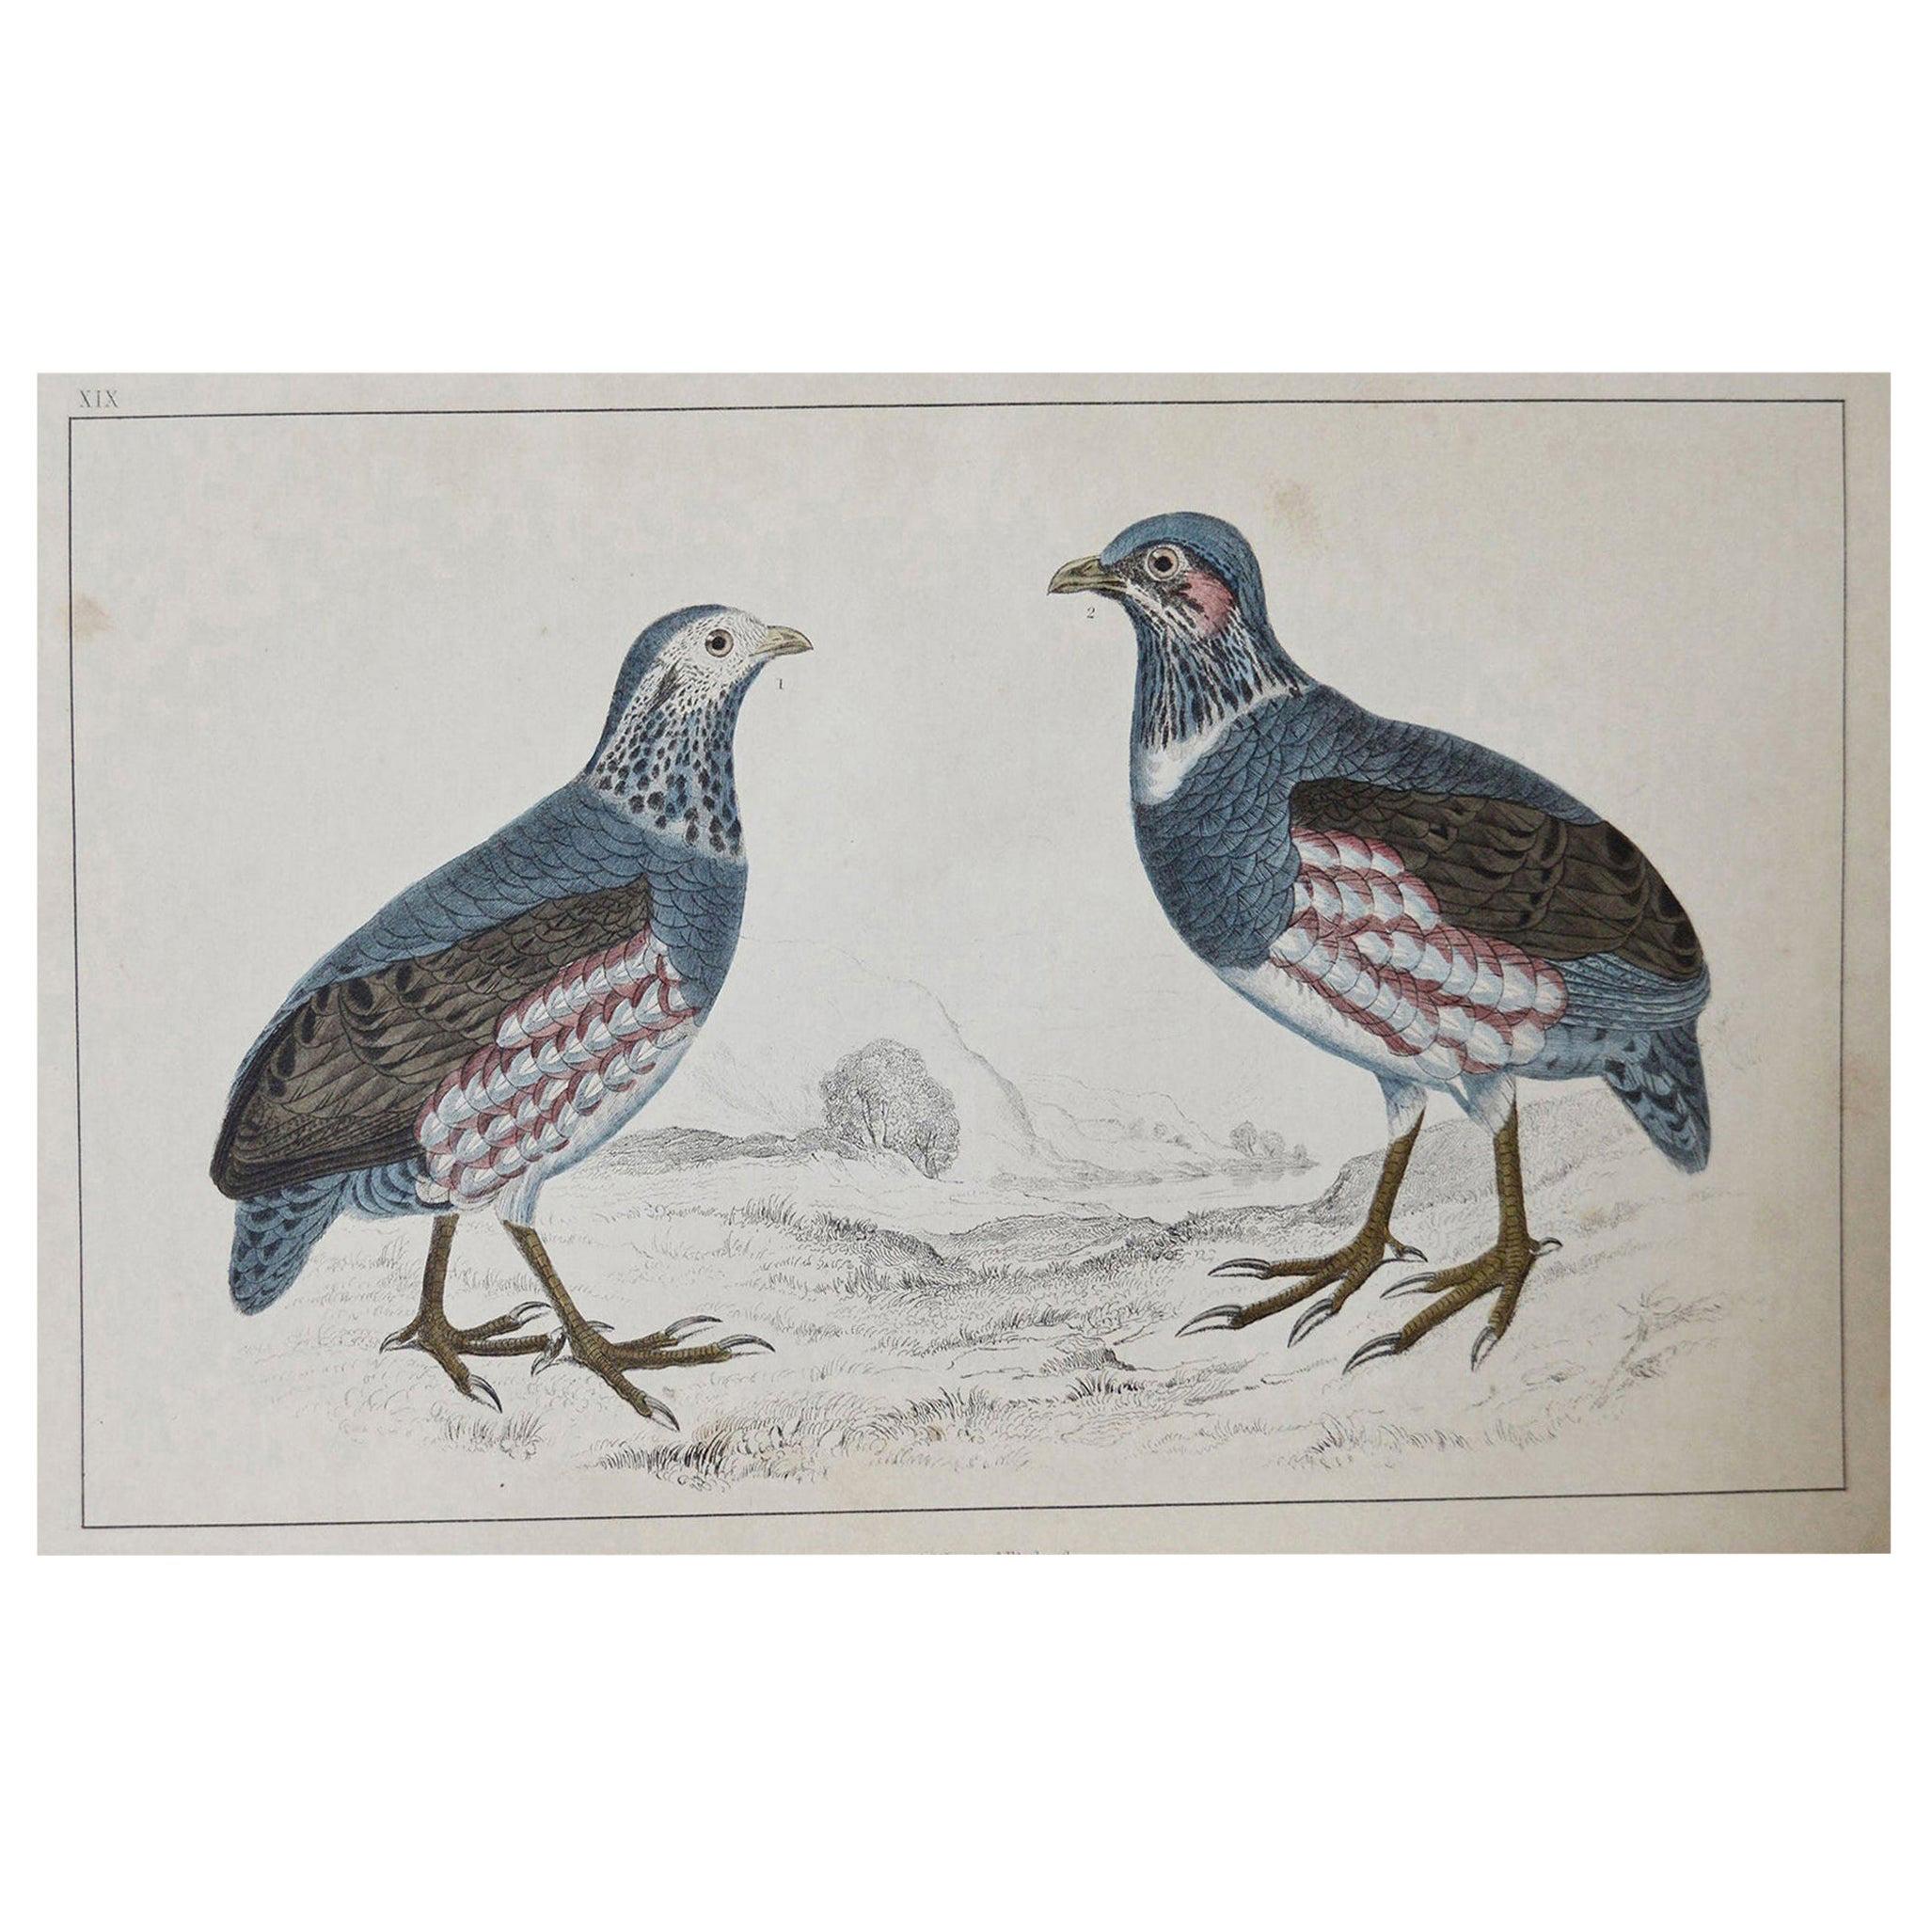 Original Antique Print of Partridge, 1847 'Unframed'